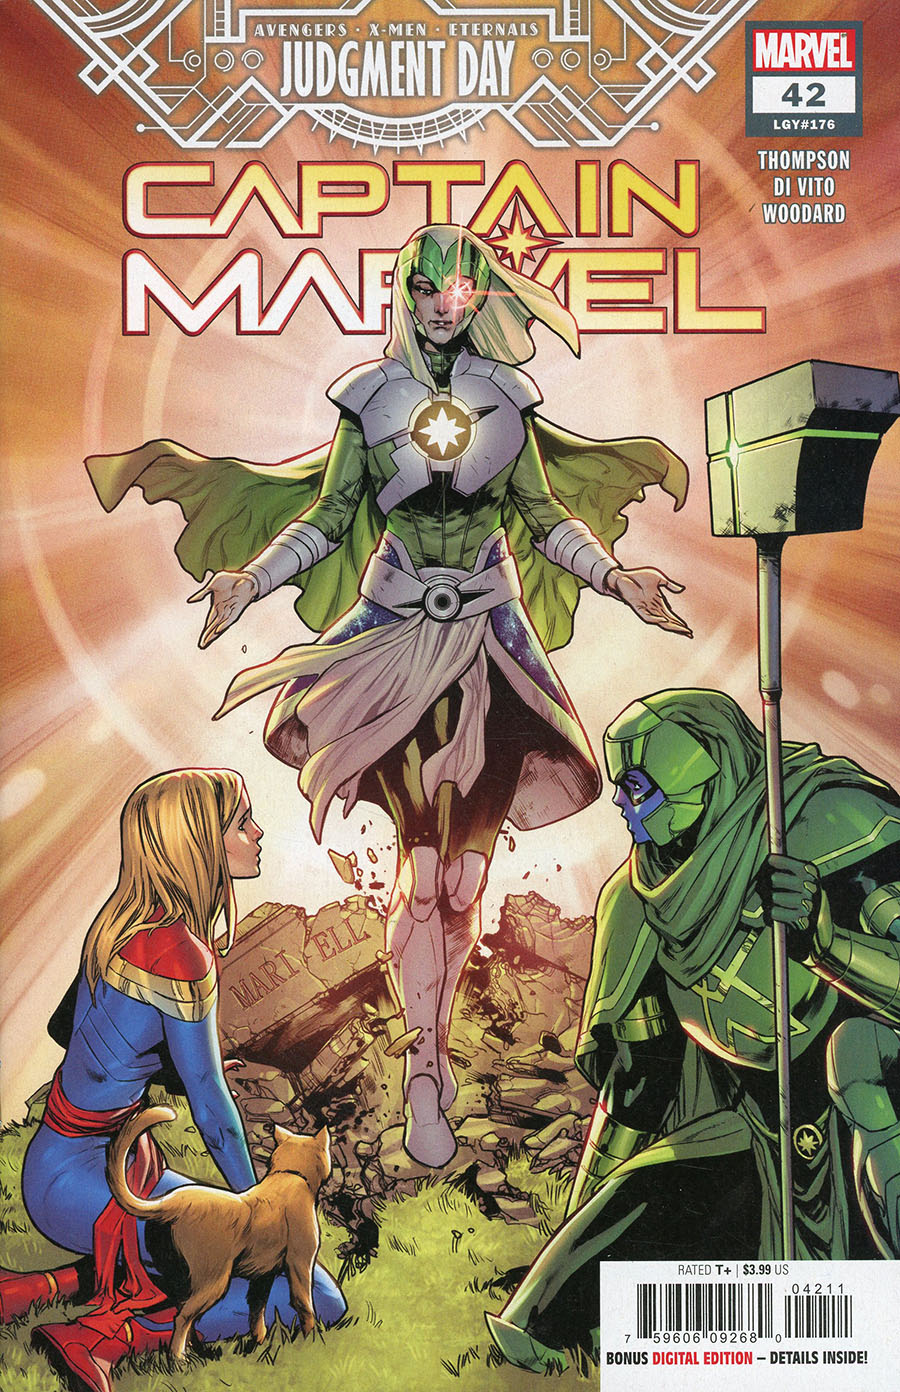 Captain Marvel Vol 9 #42 Cover A Regular Juan Frigeri Cover (A.X.E. Judgment Day Tie-In)